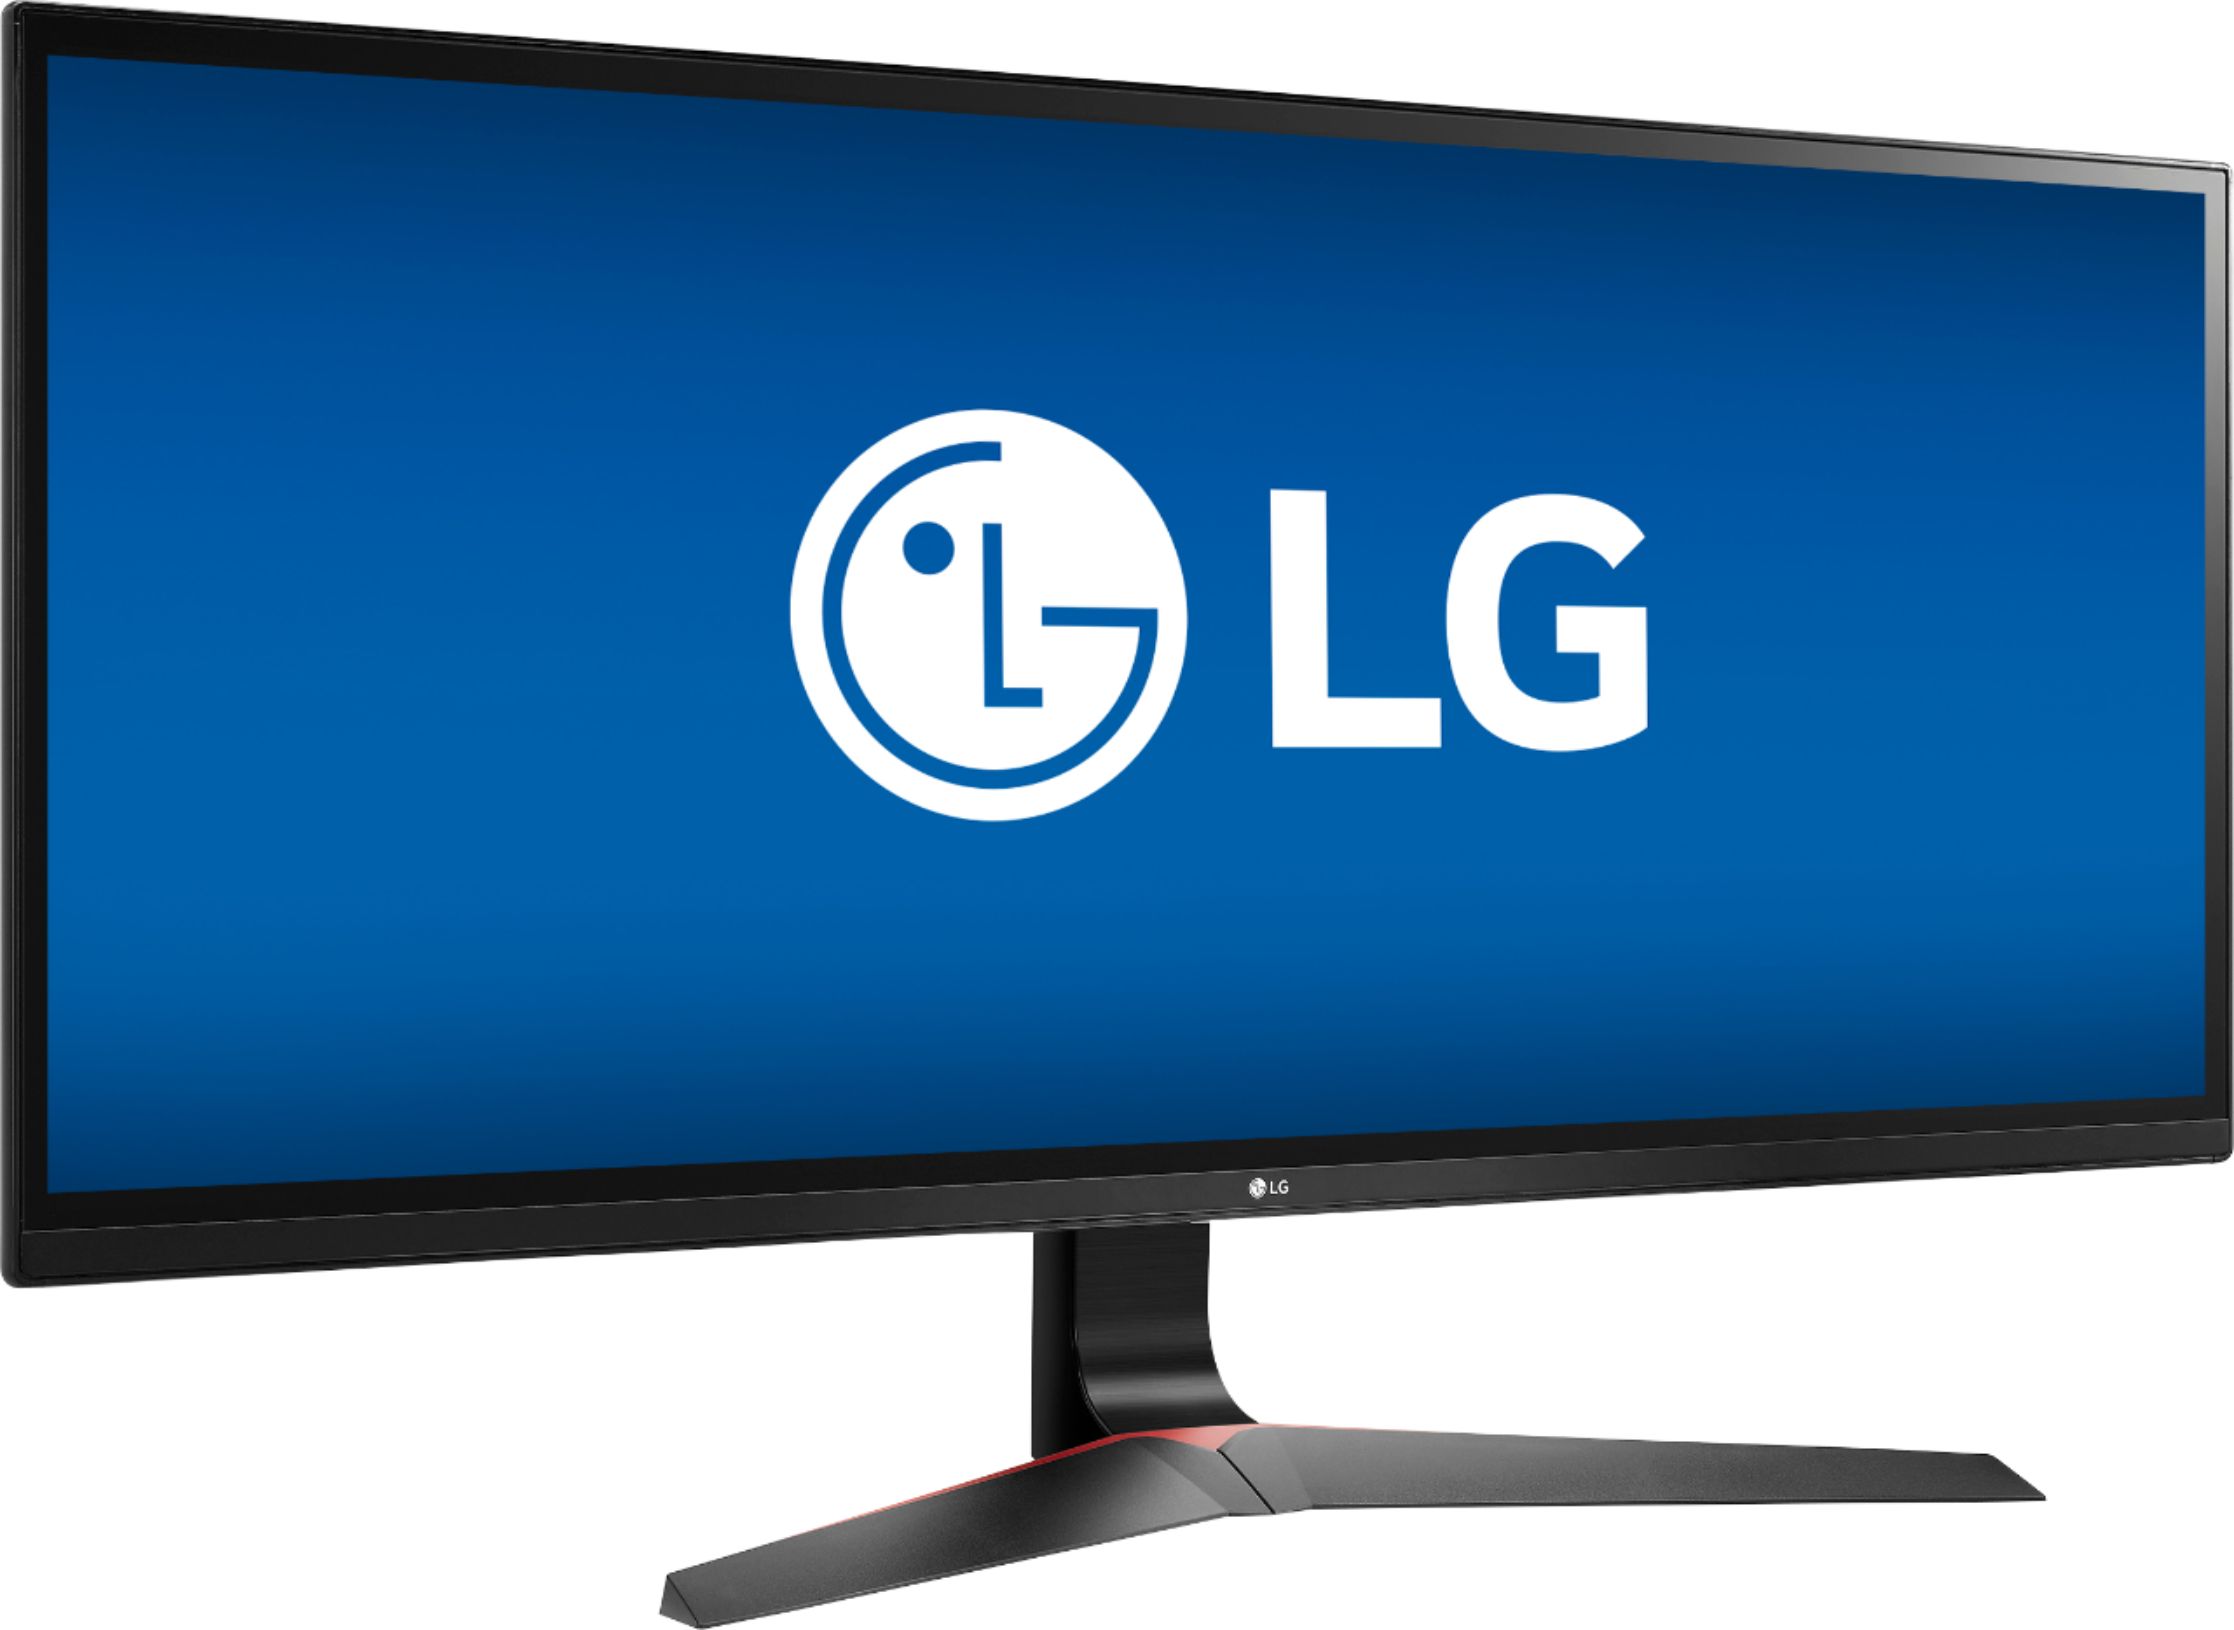 Angle View: LG - 34" IPS LCD UltraWide FHD FreeSync Monitor (DisplayPort, HDMI) - Black